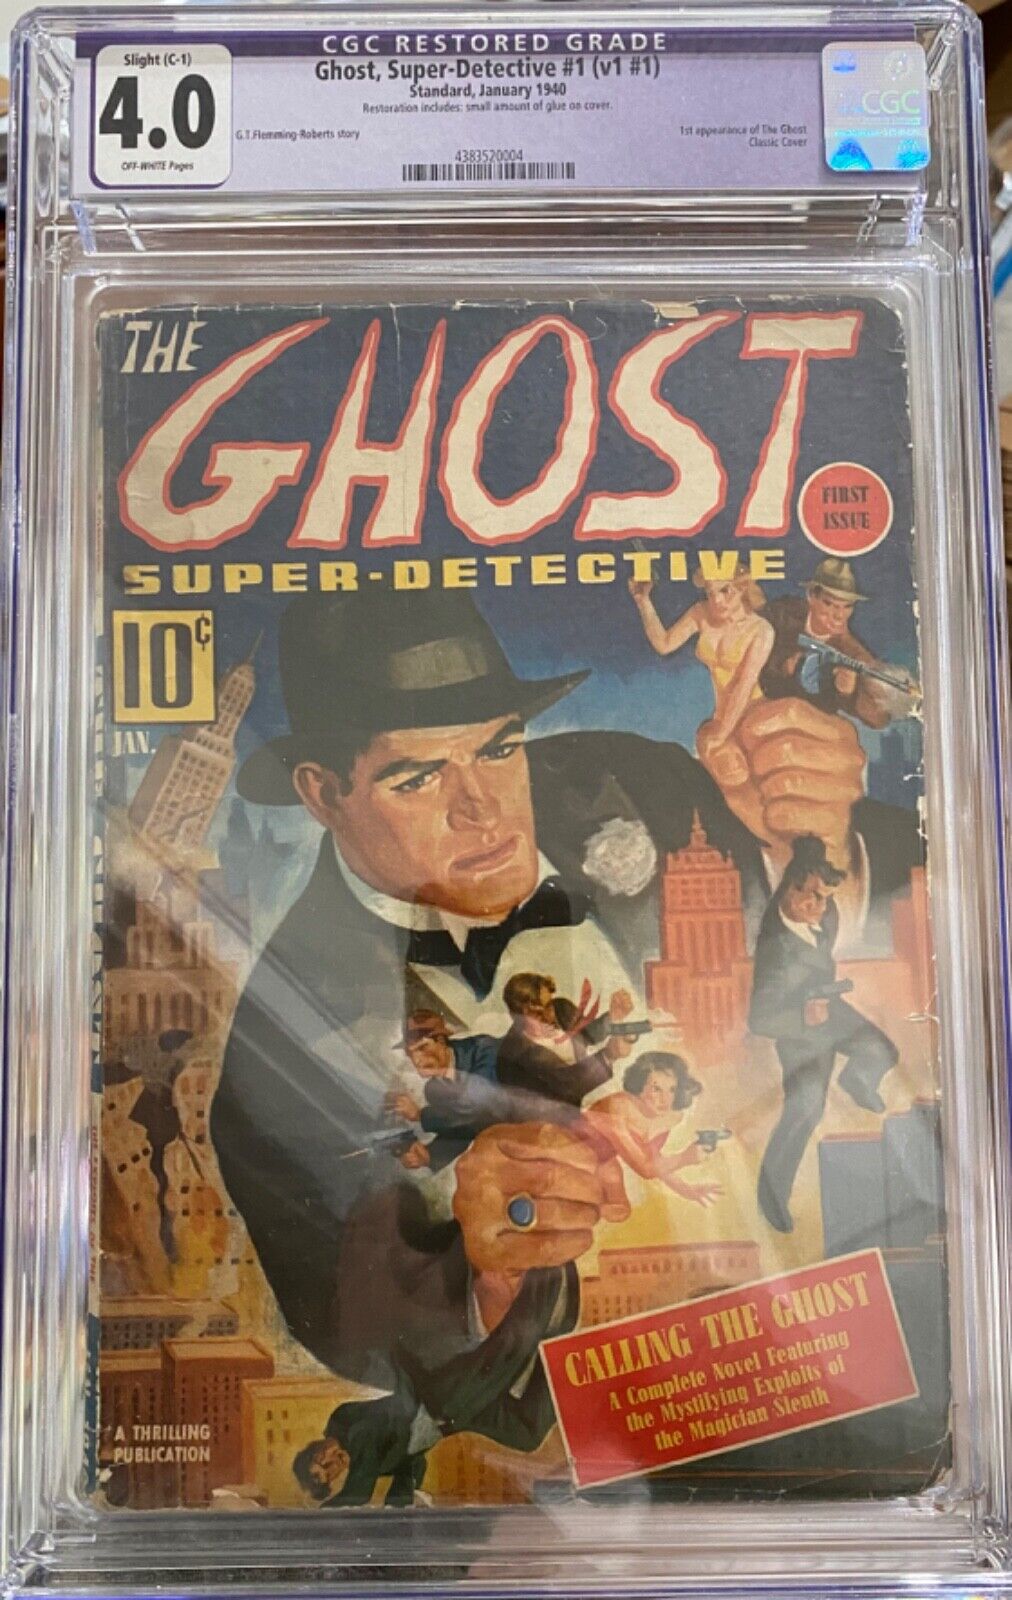 Ghost Super Detective Vol. 1 #1 CGC 4.0 (R) slight C-1 Jan 1940 Key 1st App